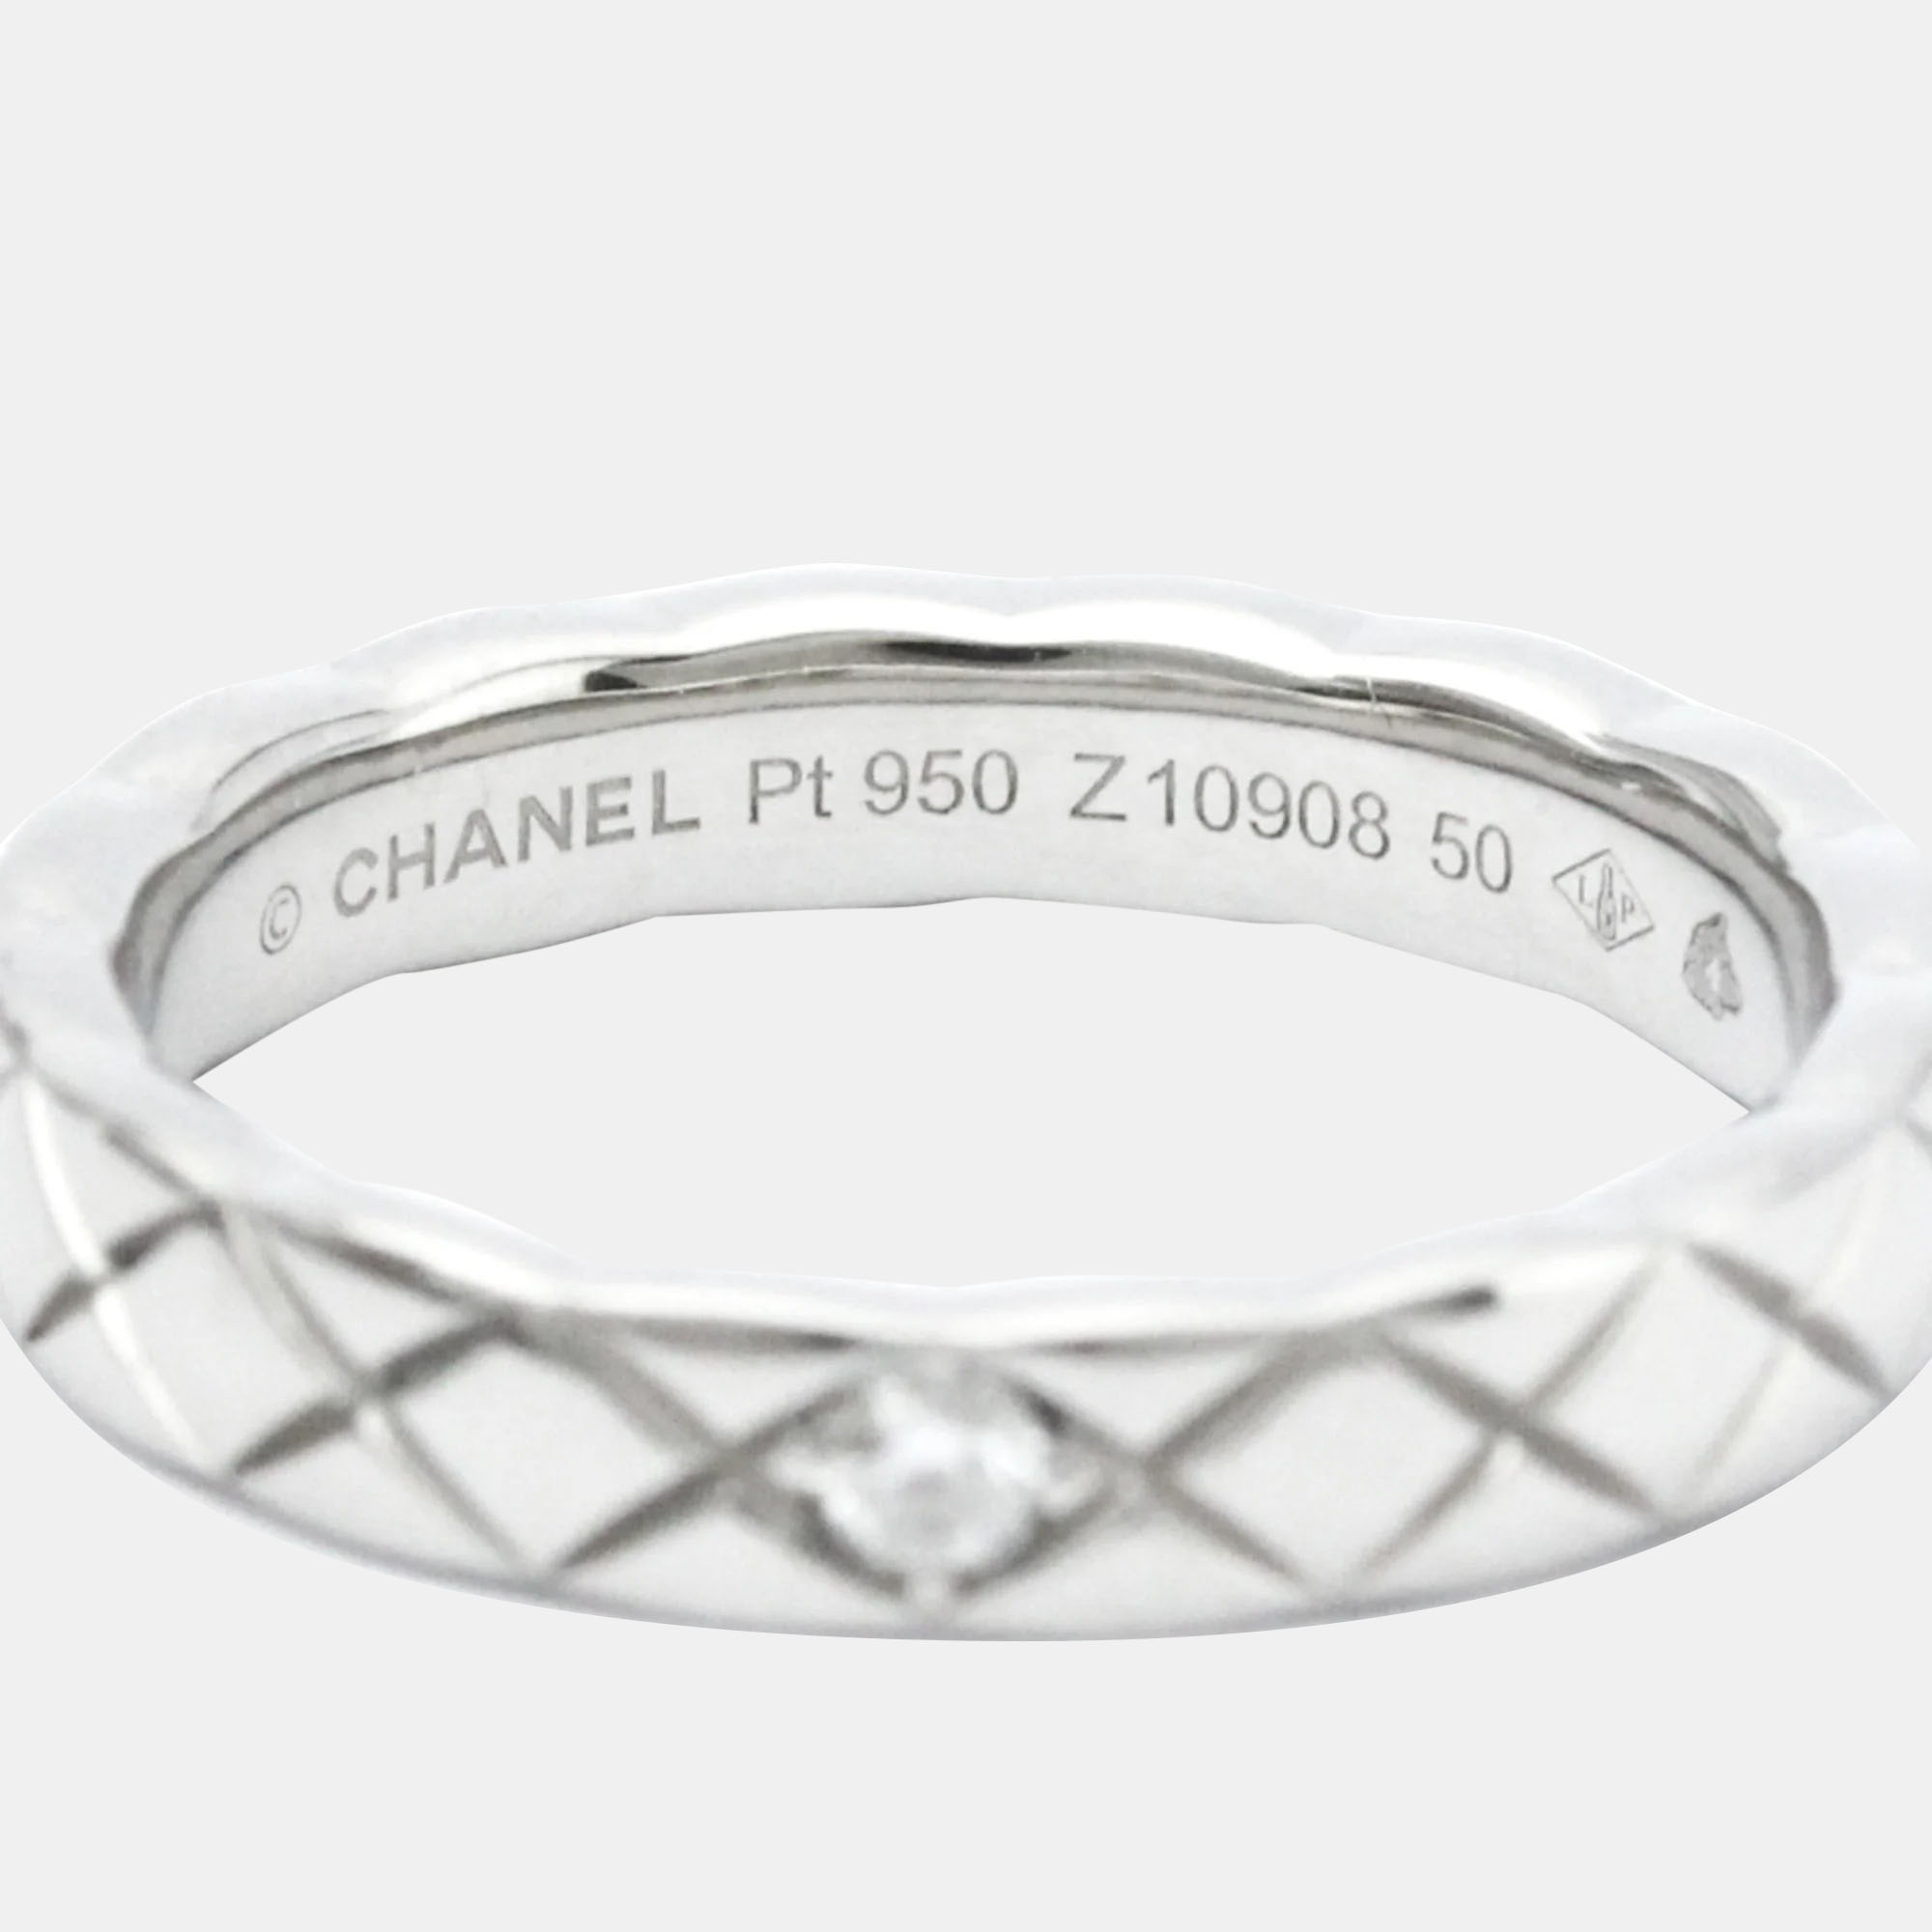 

Chanel 18K White Gold Coco Crush Slim Ring EU 50